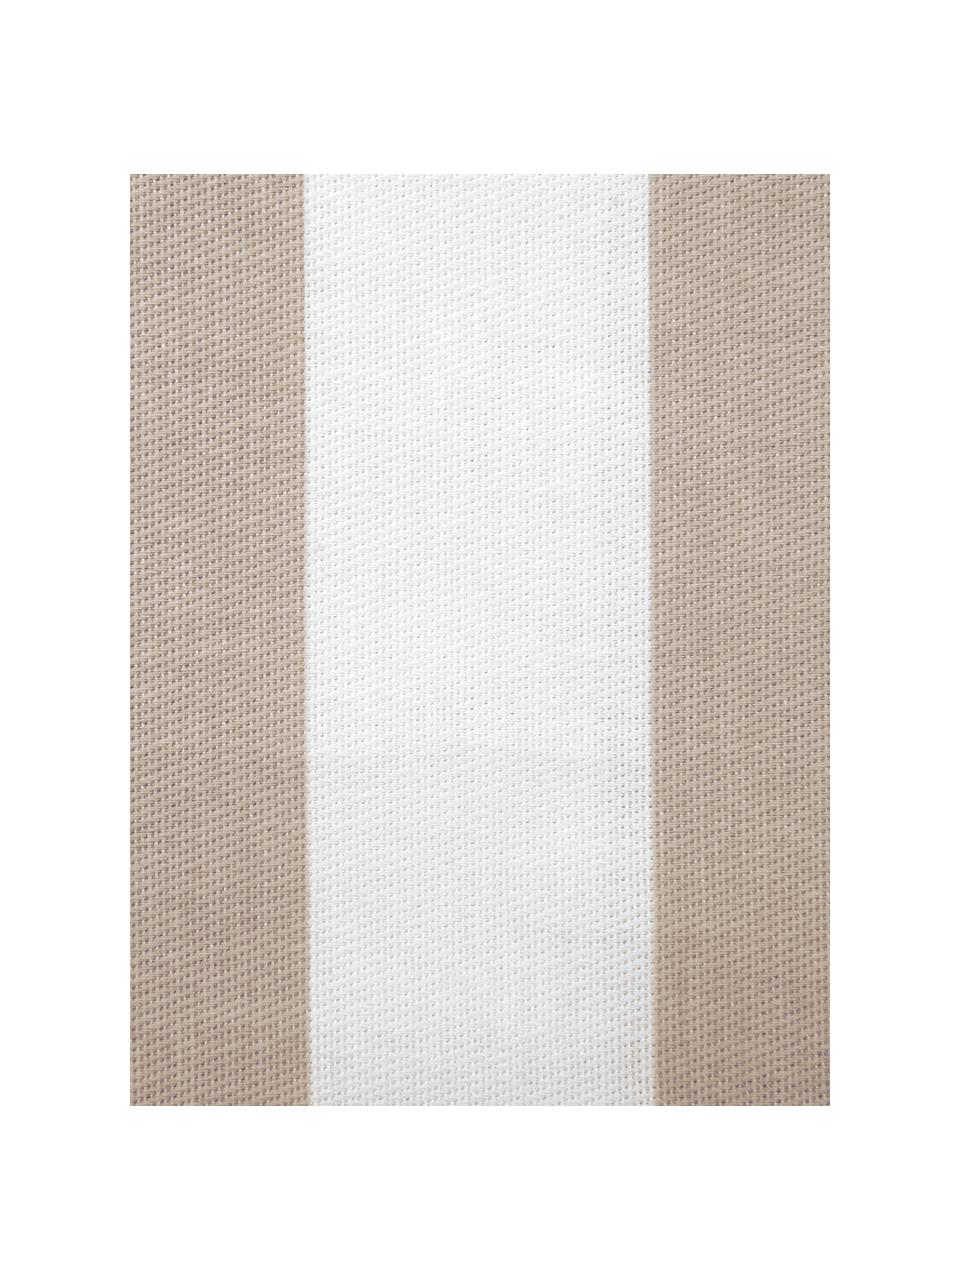 Gestreepte kussenhoes Timon in beige/wit, 100% katoen, Taupe, wit, B 45 x L 45 cm